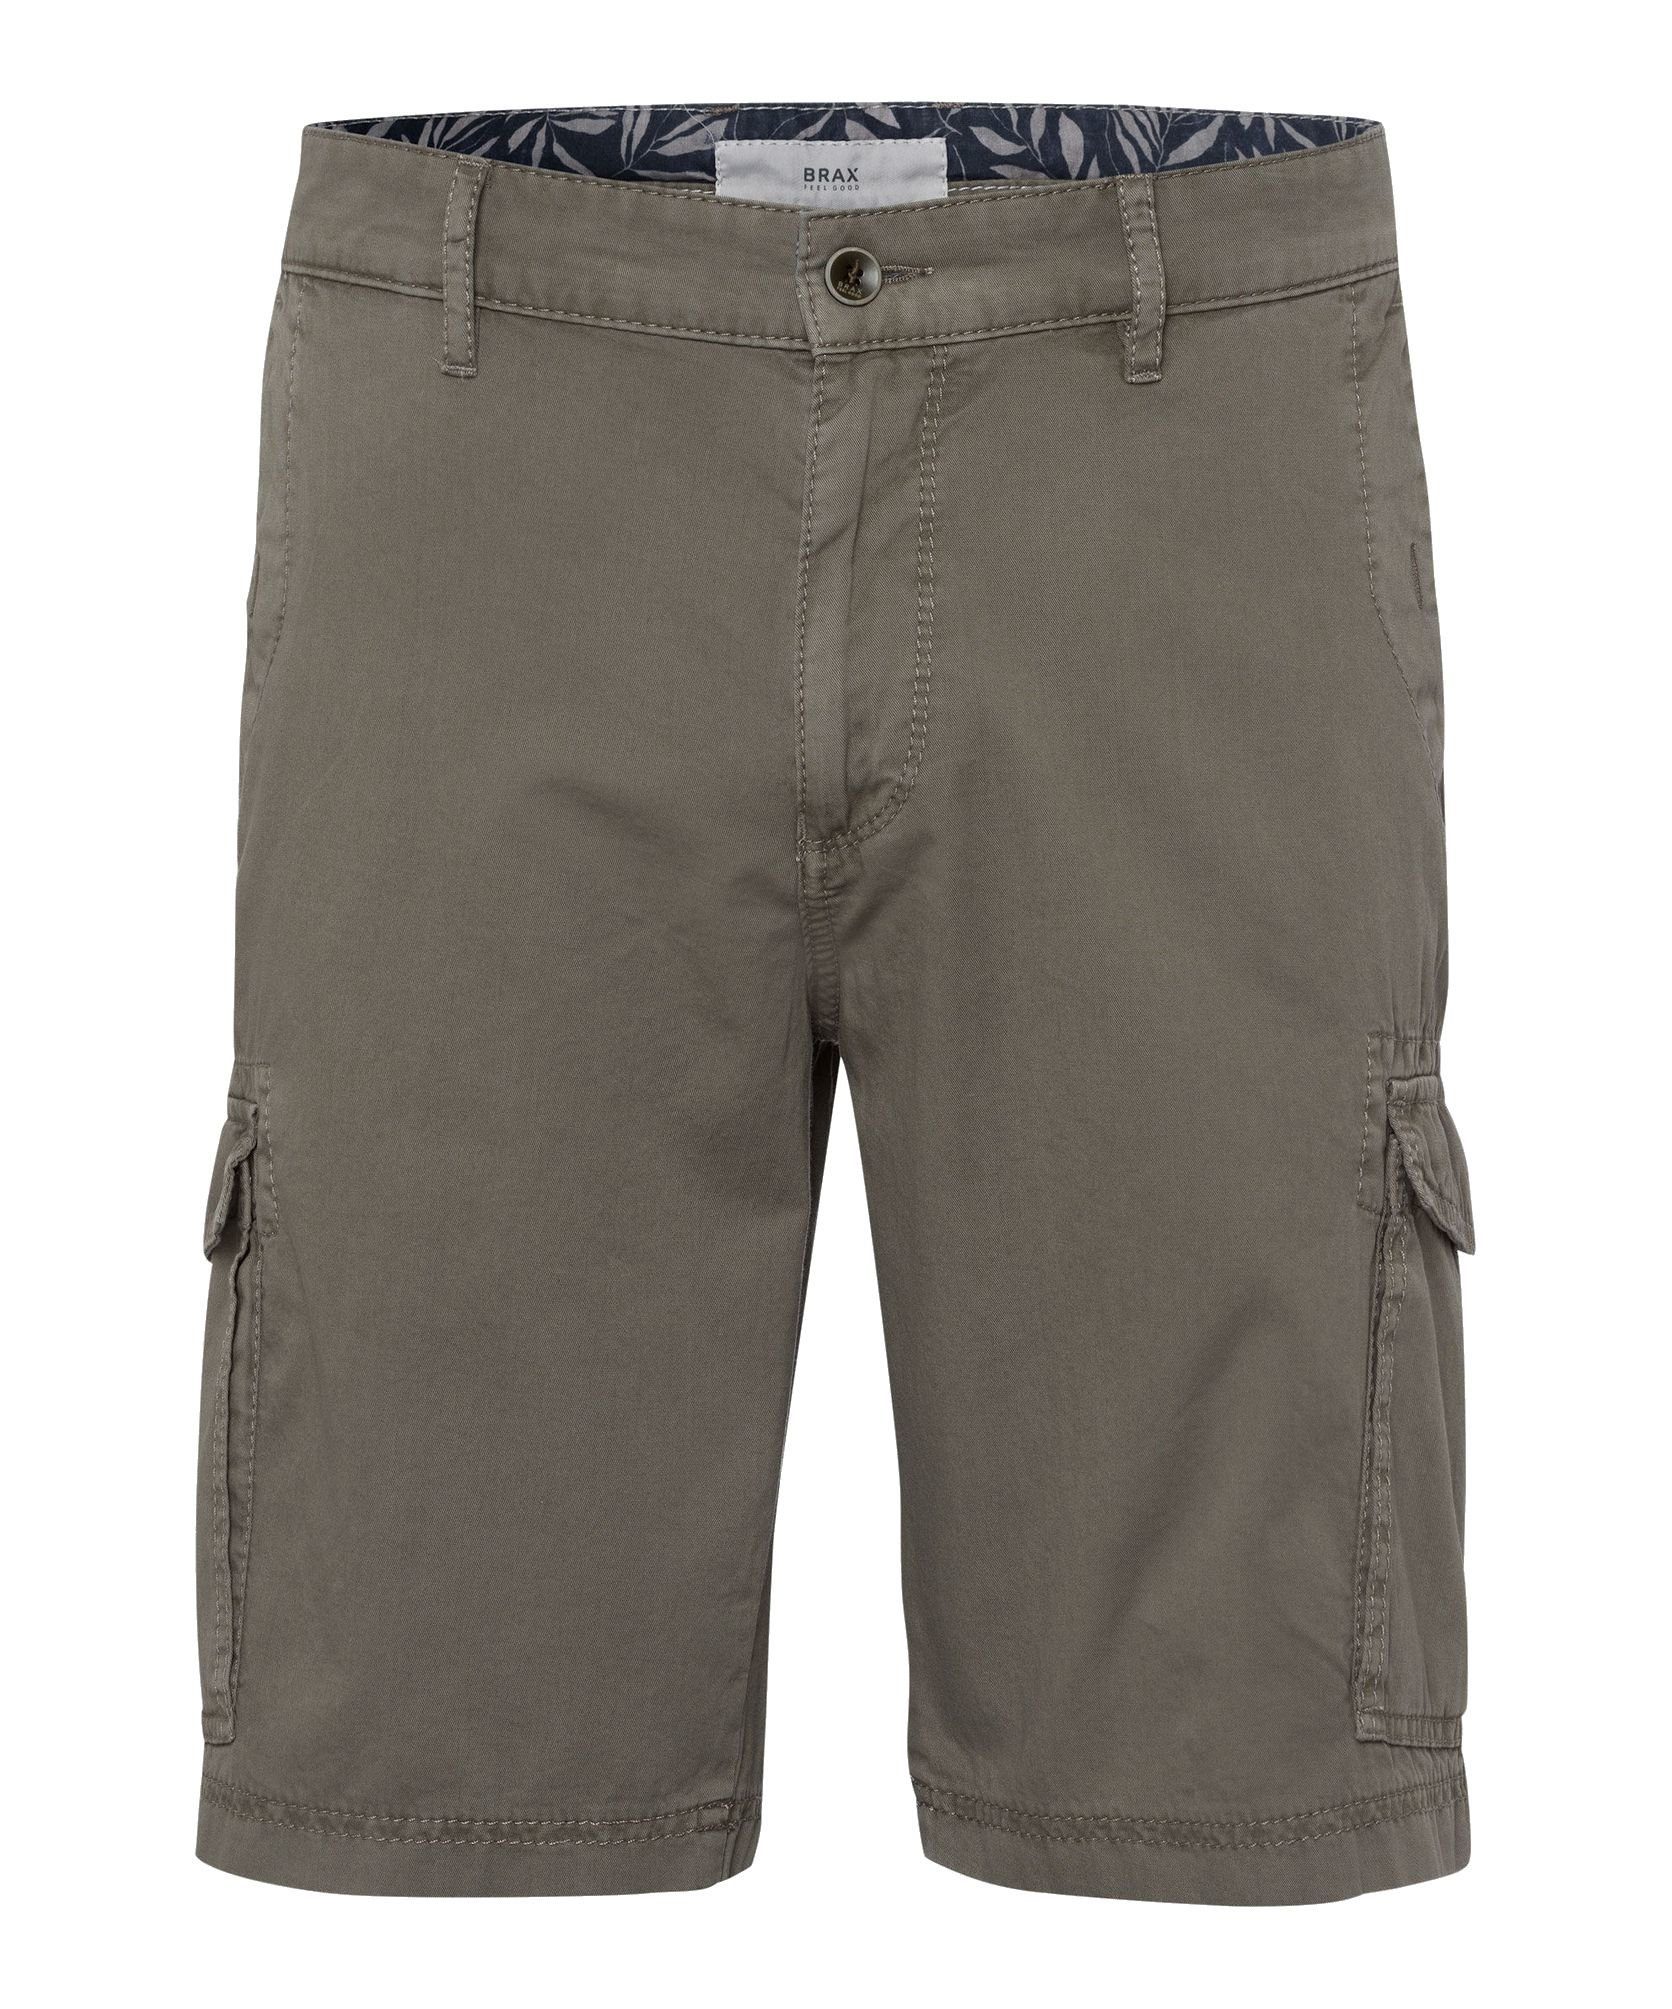 Brax Shorts Style Brazil (82-6858)